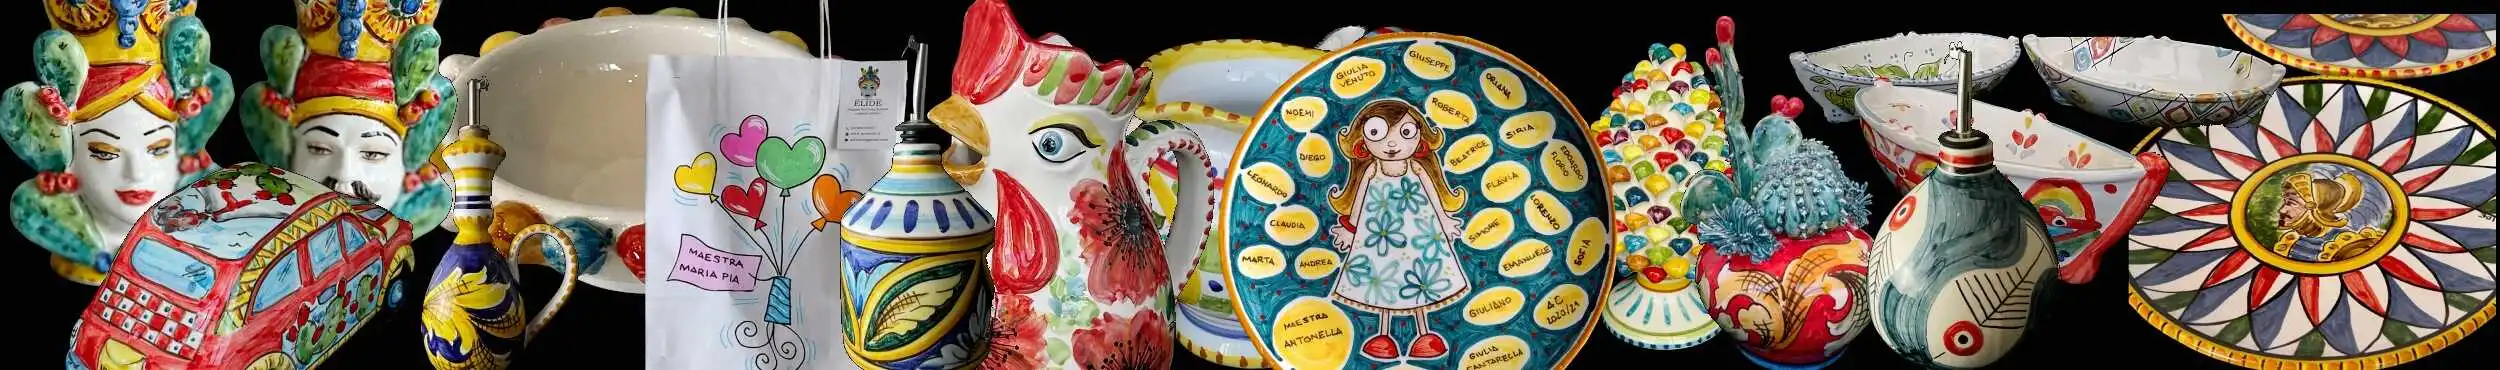 Artelide - Idee regalo per le maestre in ceramica di Caltagirone